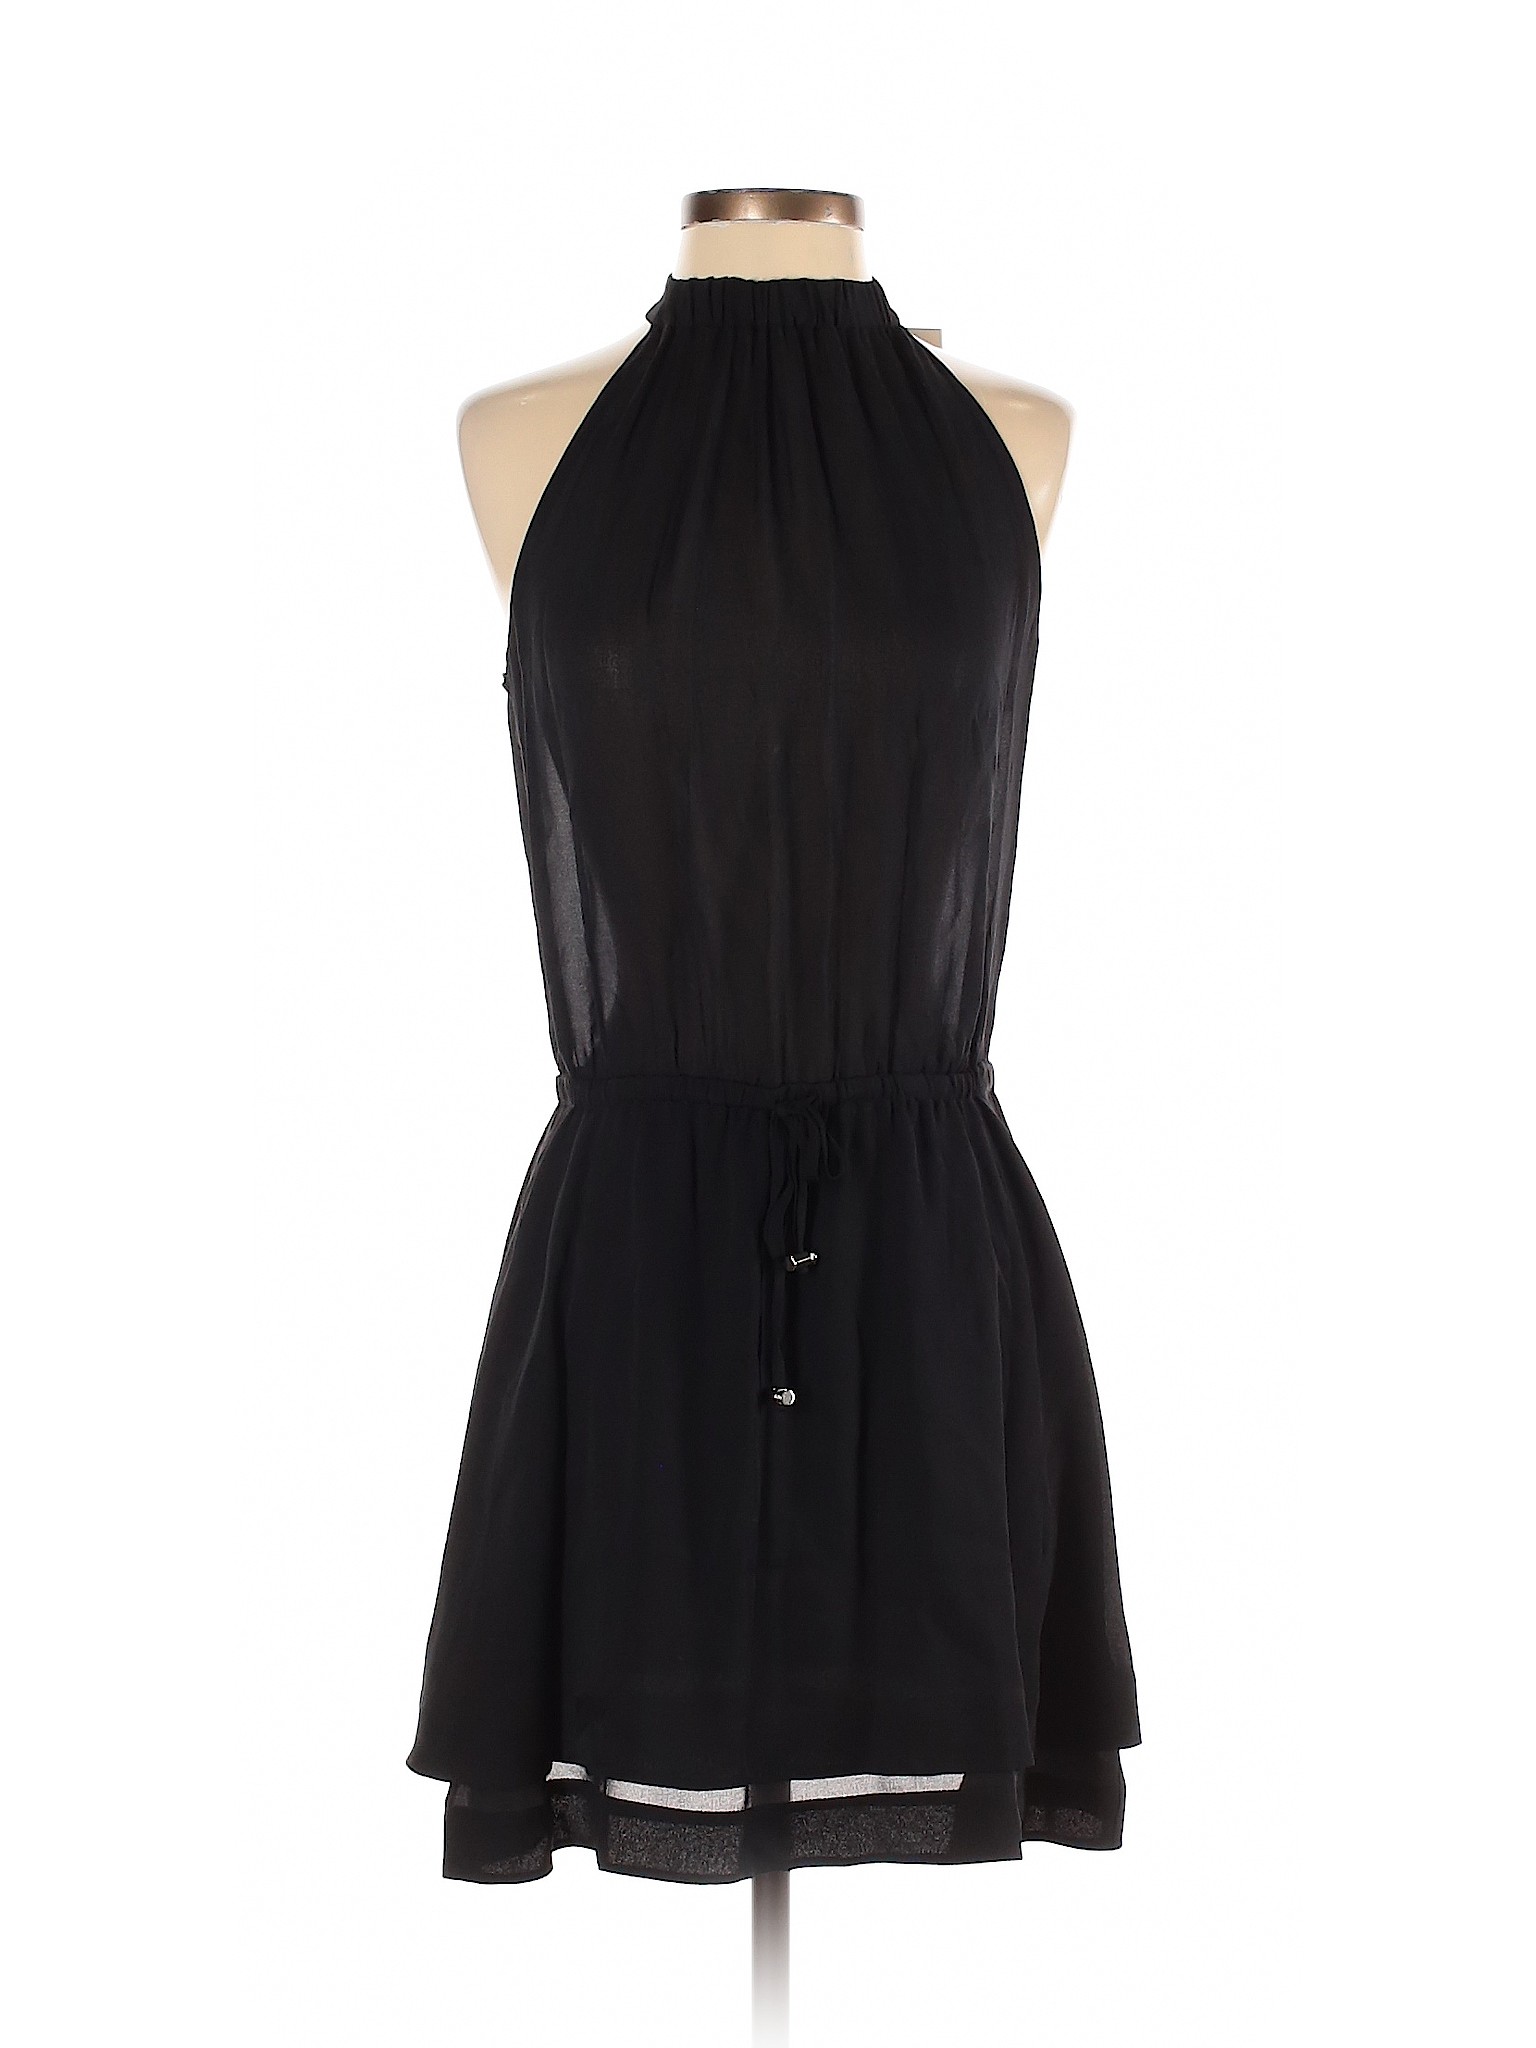 NWT A.L.C. Women Black Casual Dress 2 | eBay